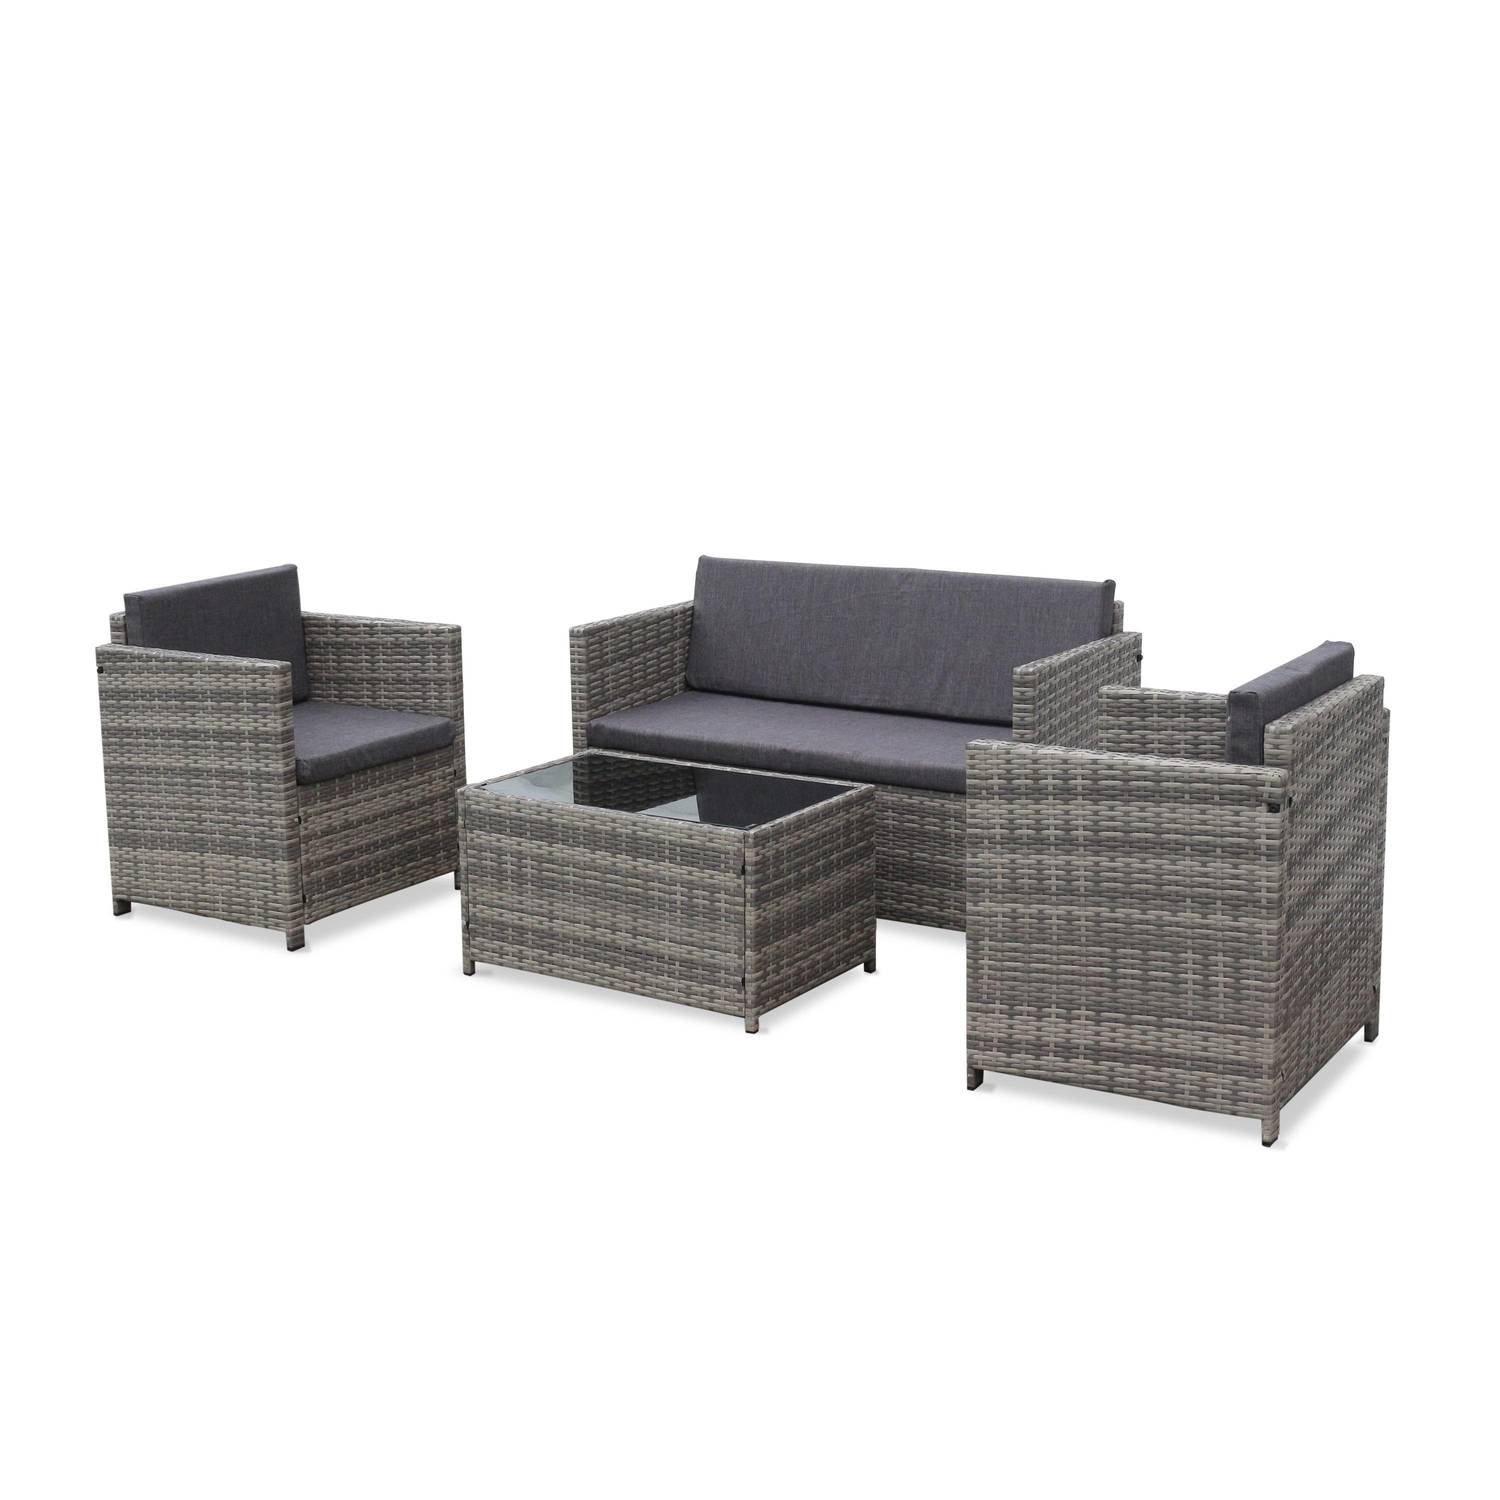 4-seater polyrattan garden sofa set - sofa, 2 armchairs, coffee table - Perugia - Mixed Grey rattan, Grey cushions Photo1